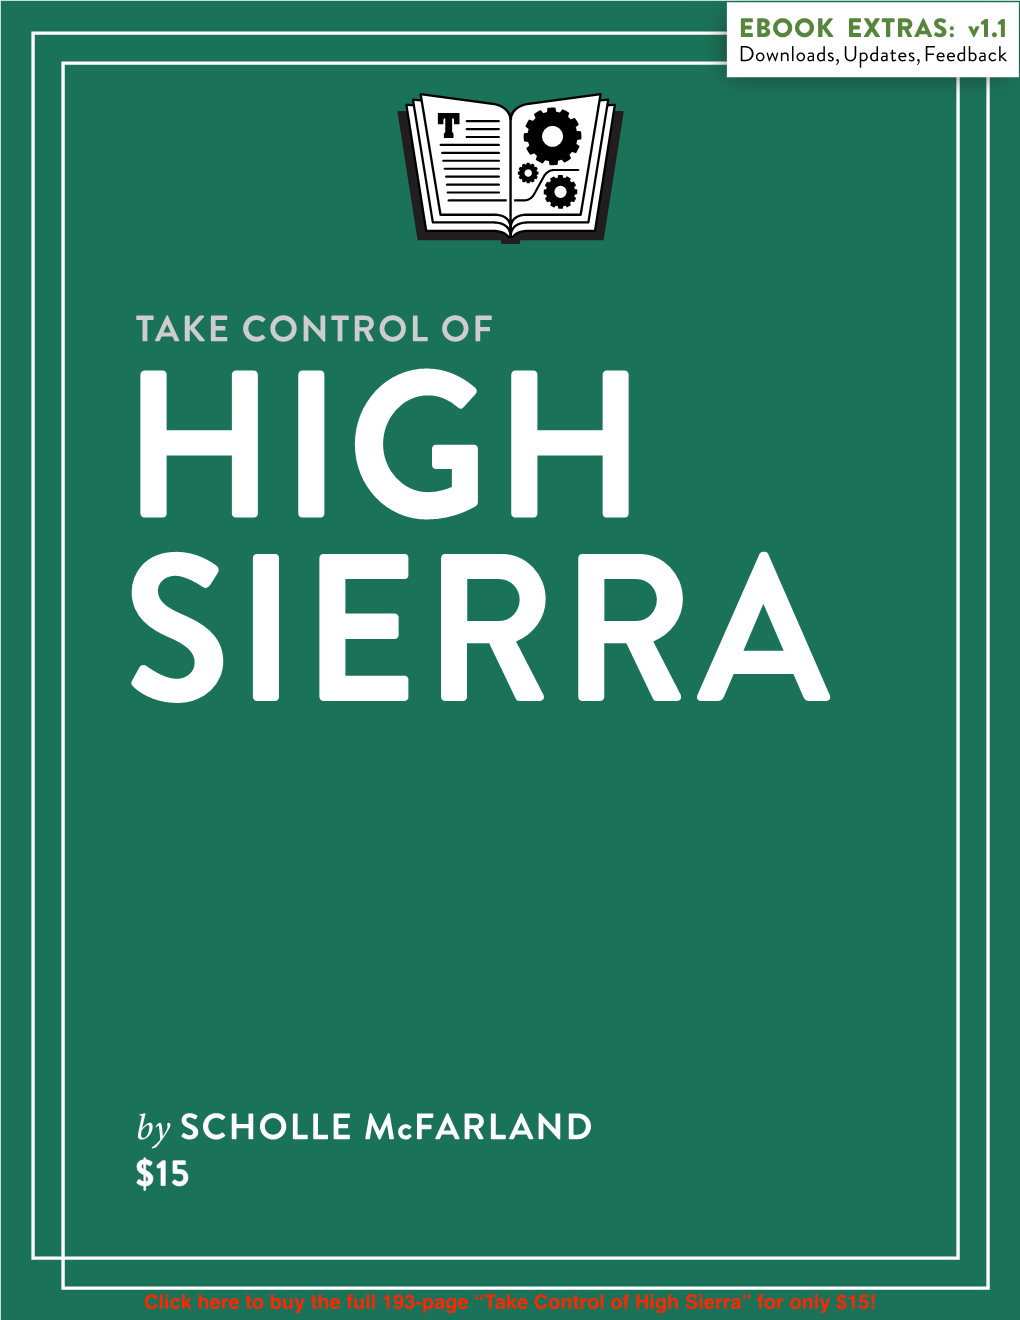 Take Control of High Sierra (1.1) SAMPLE